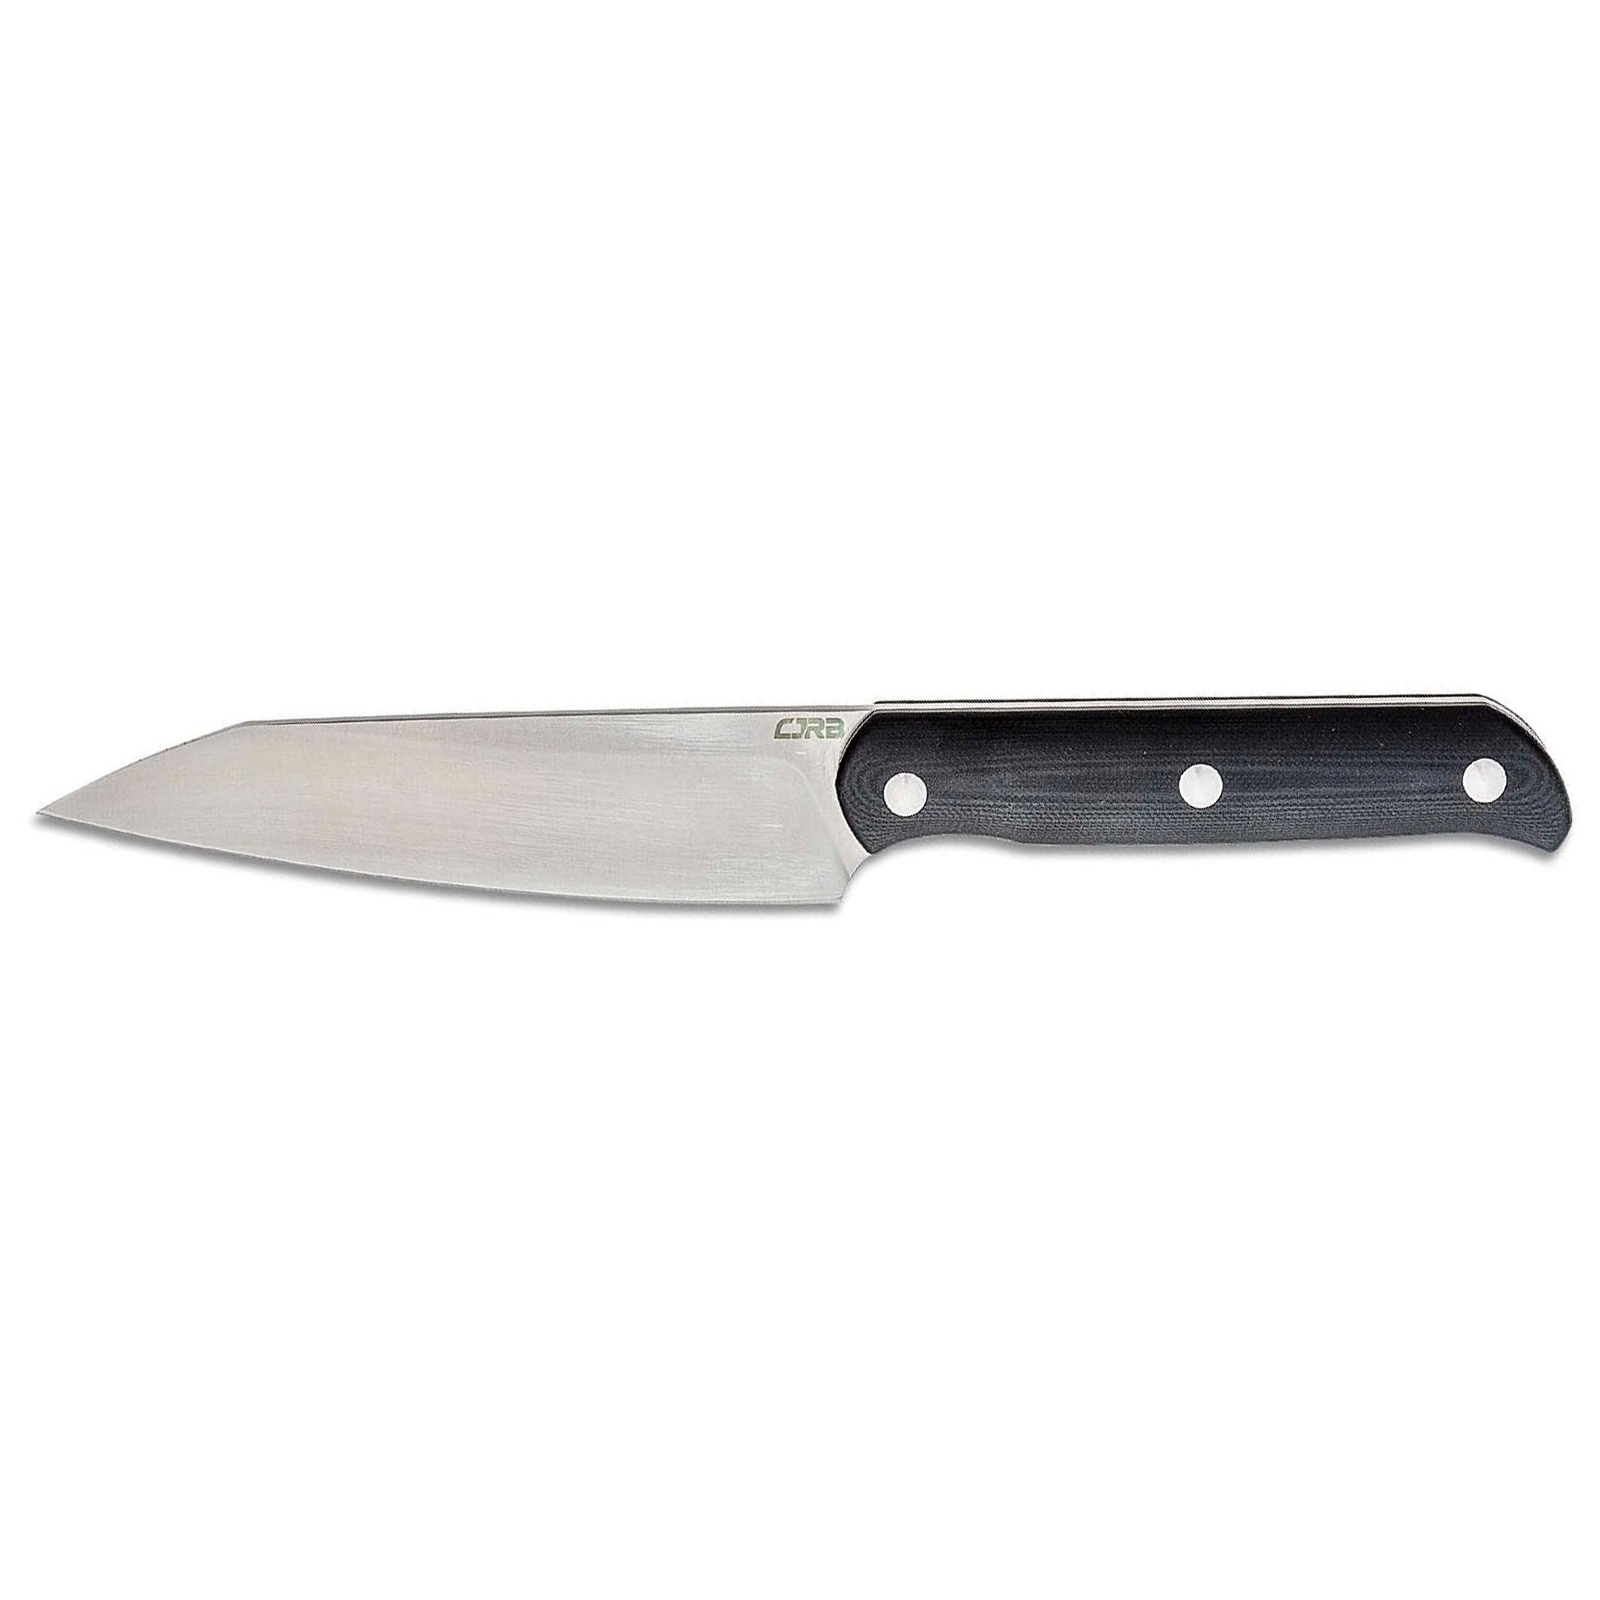 Нож CJRB Silax SW Olive (J1921B-GN)